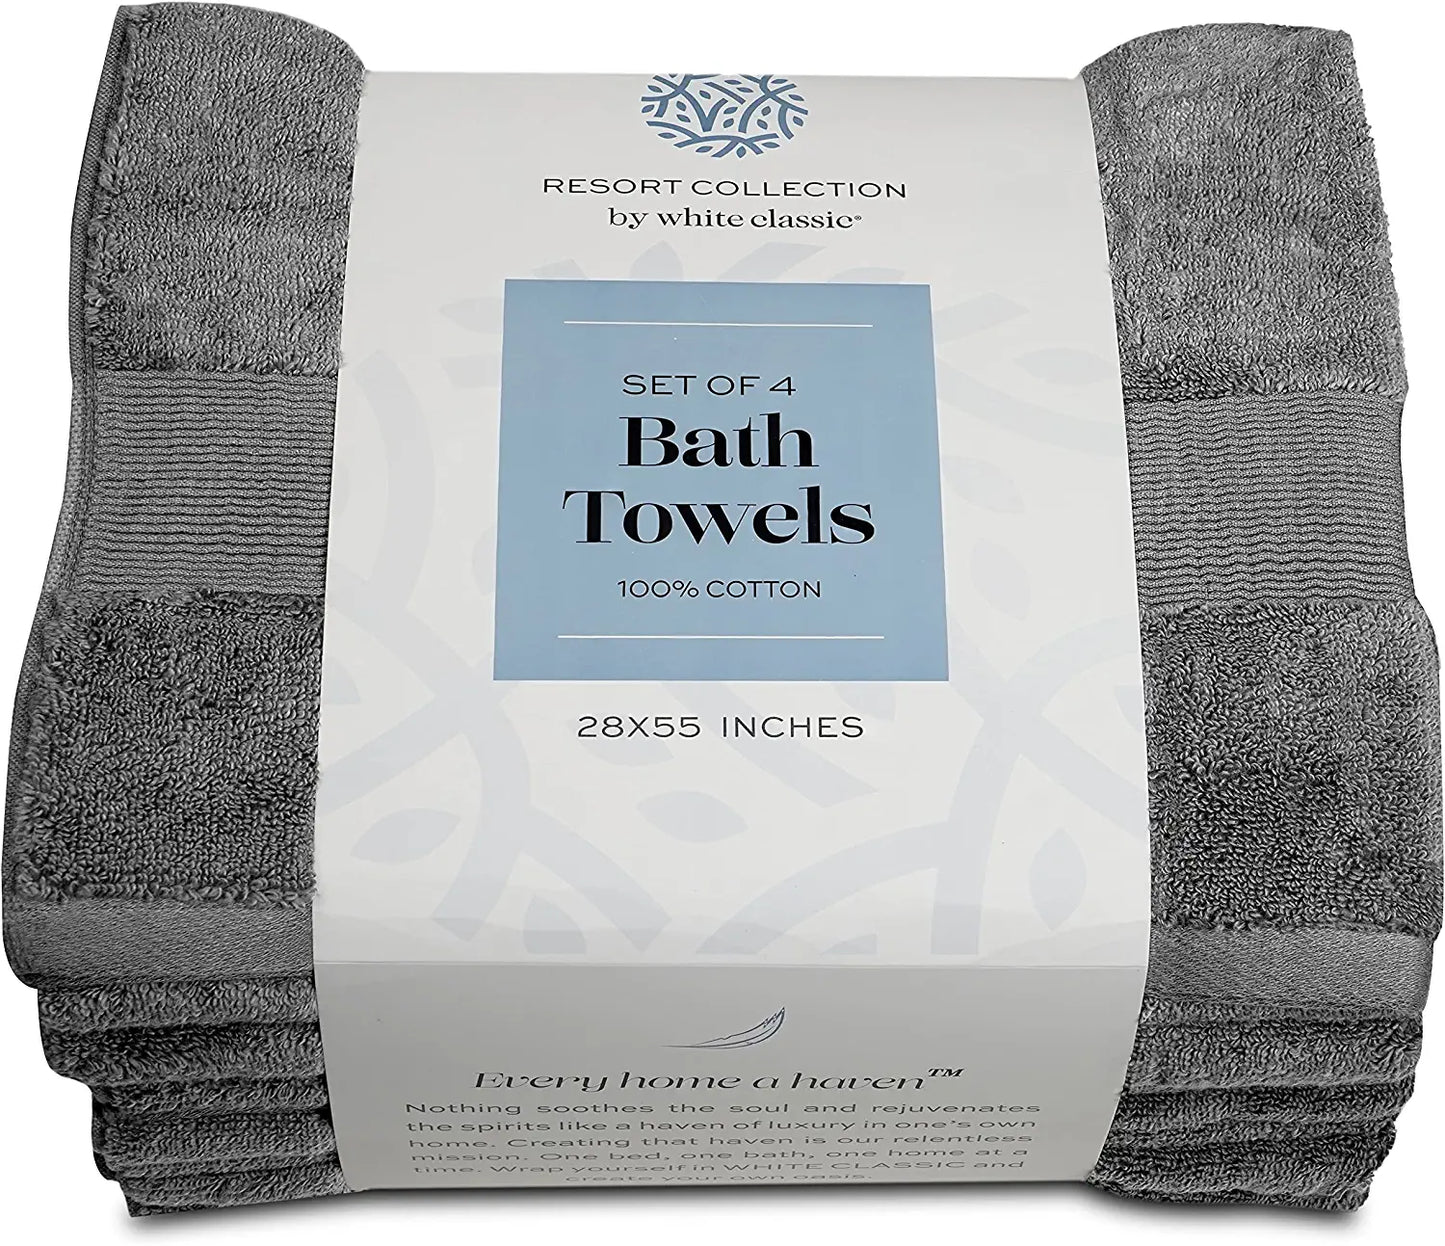 28x55 bath towels